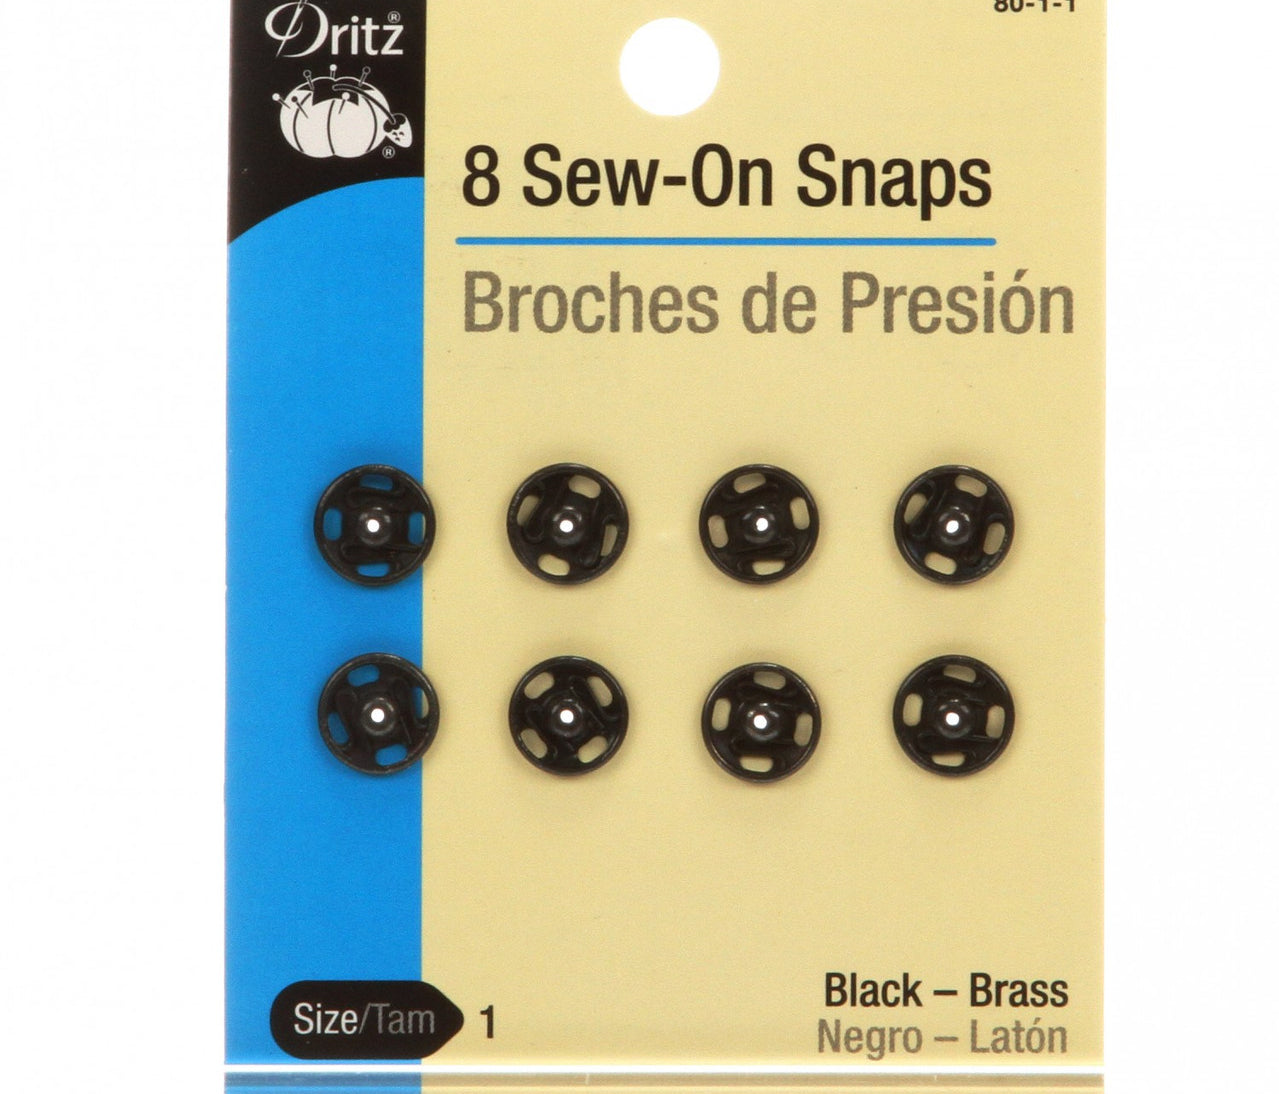 Dritz Snap Sew-On Size 1 - Black